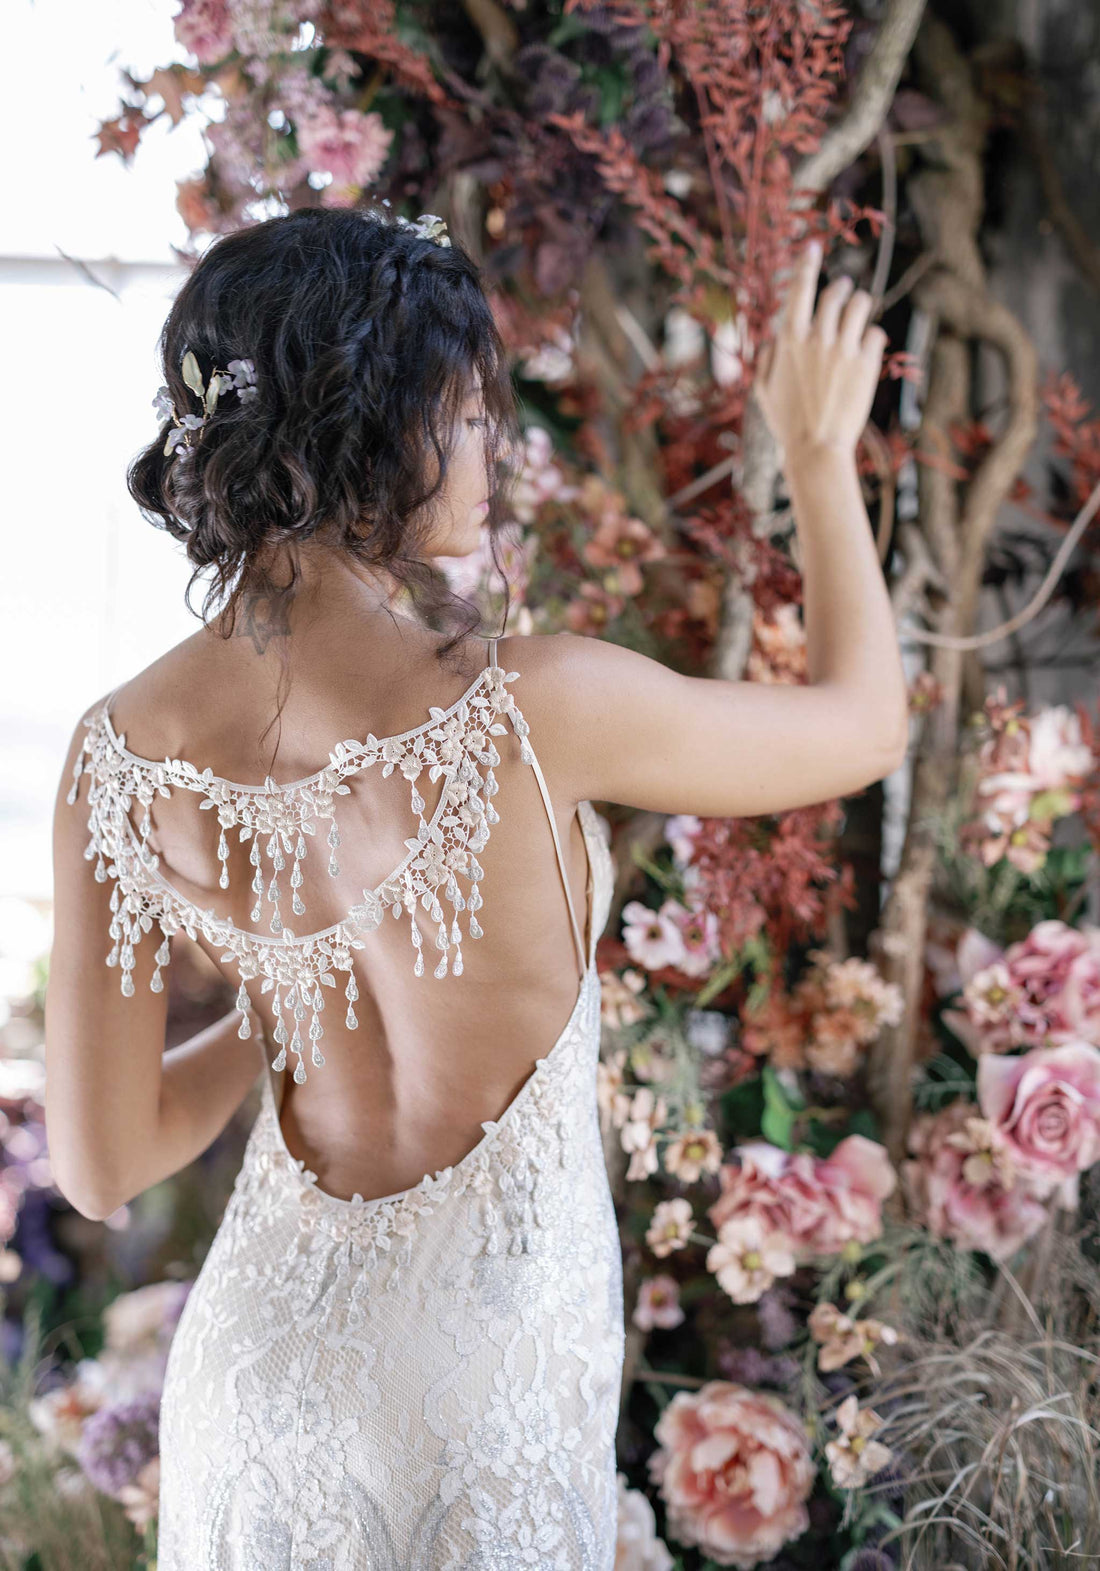 Briolette Low Back Wedding Dress with trims adorning the open back design